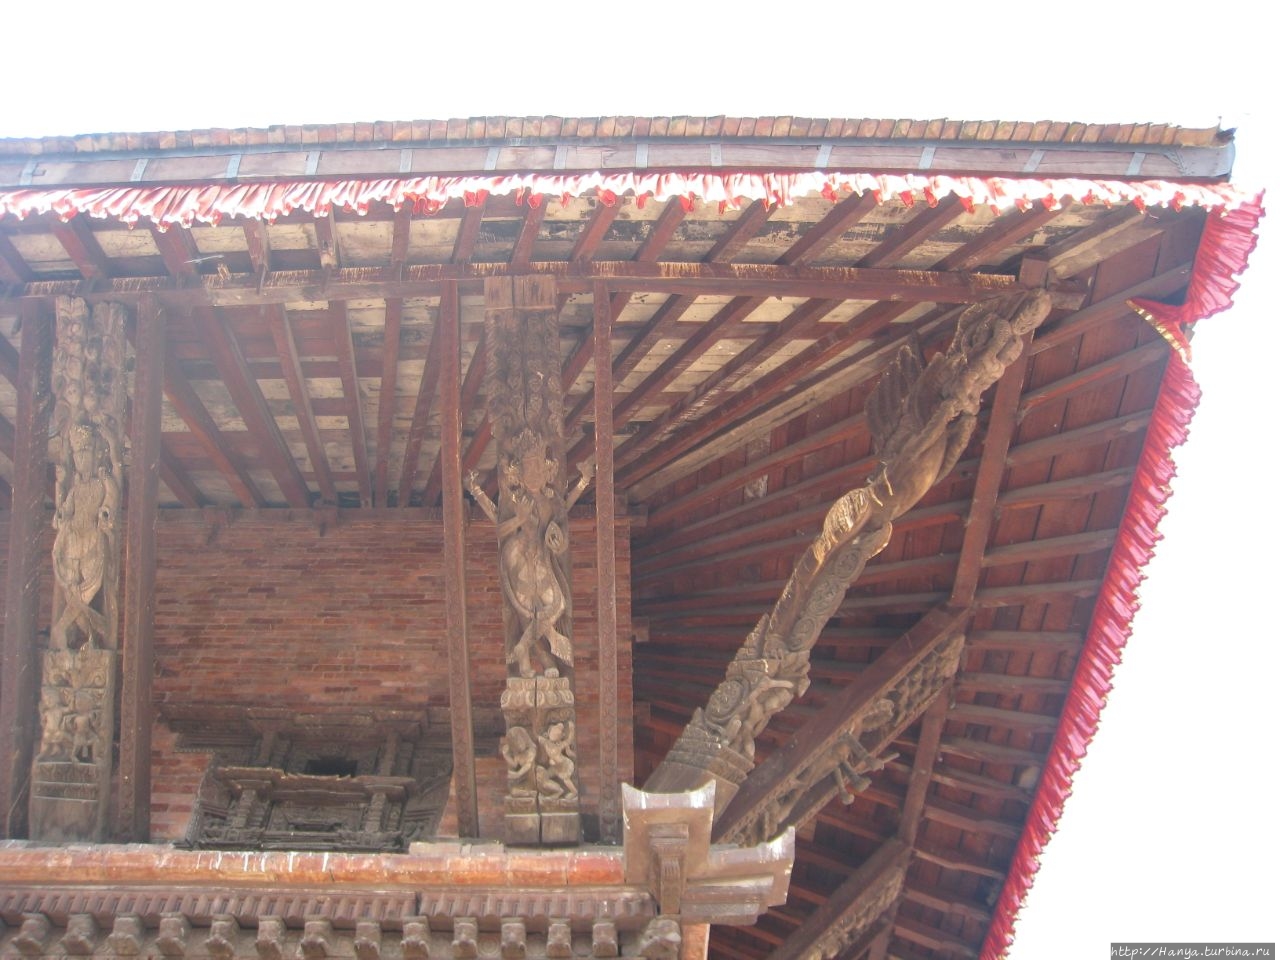 Char Dham Durbar Bhaktapur (копии мест поклонения Индии) Ч91